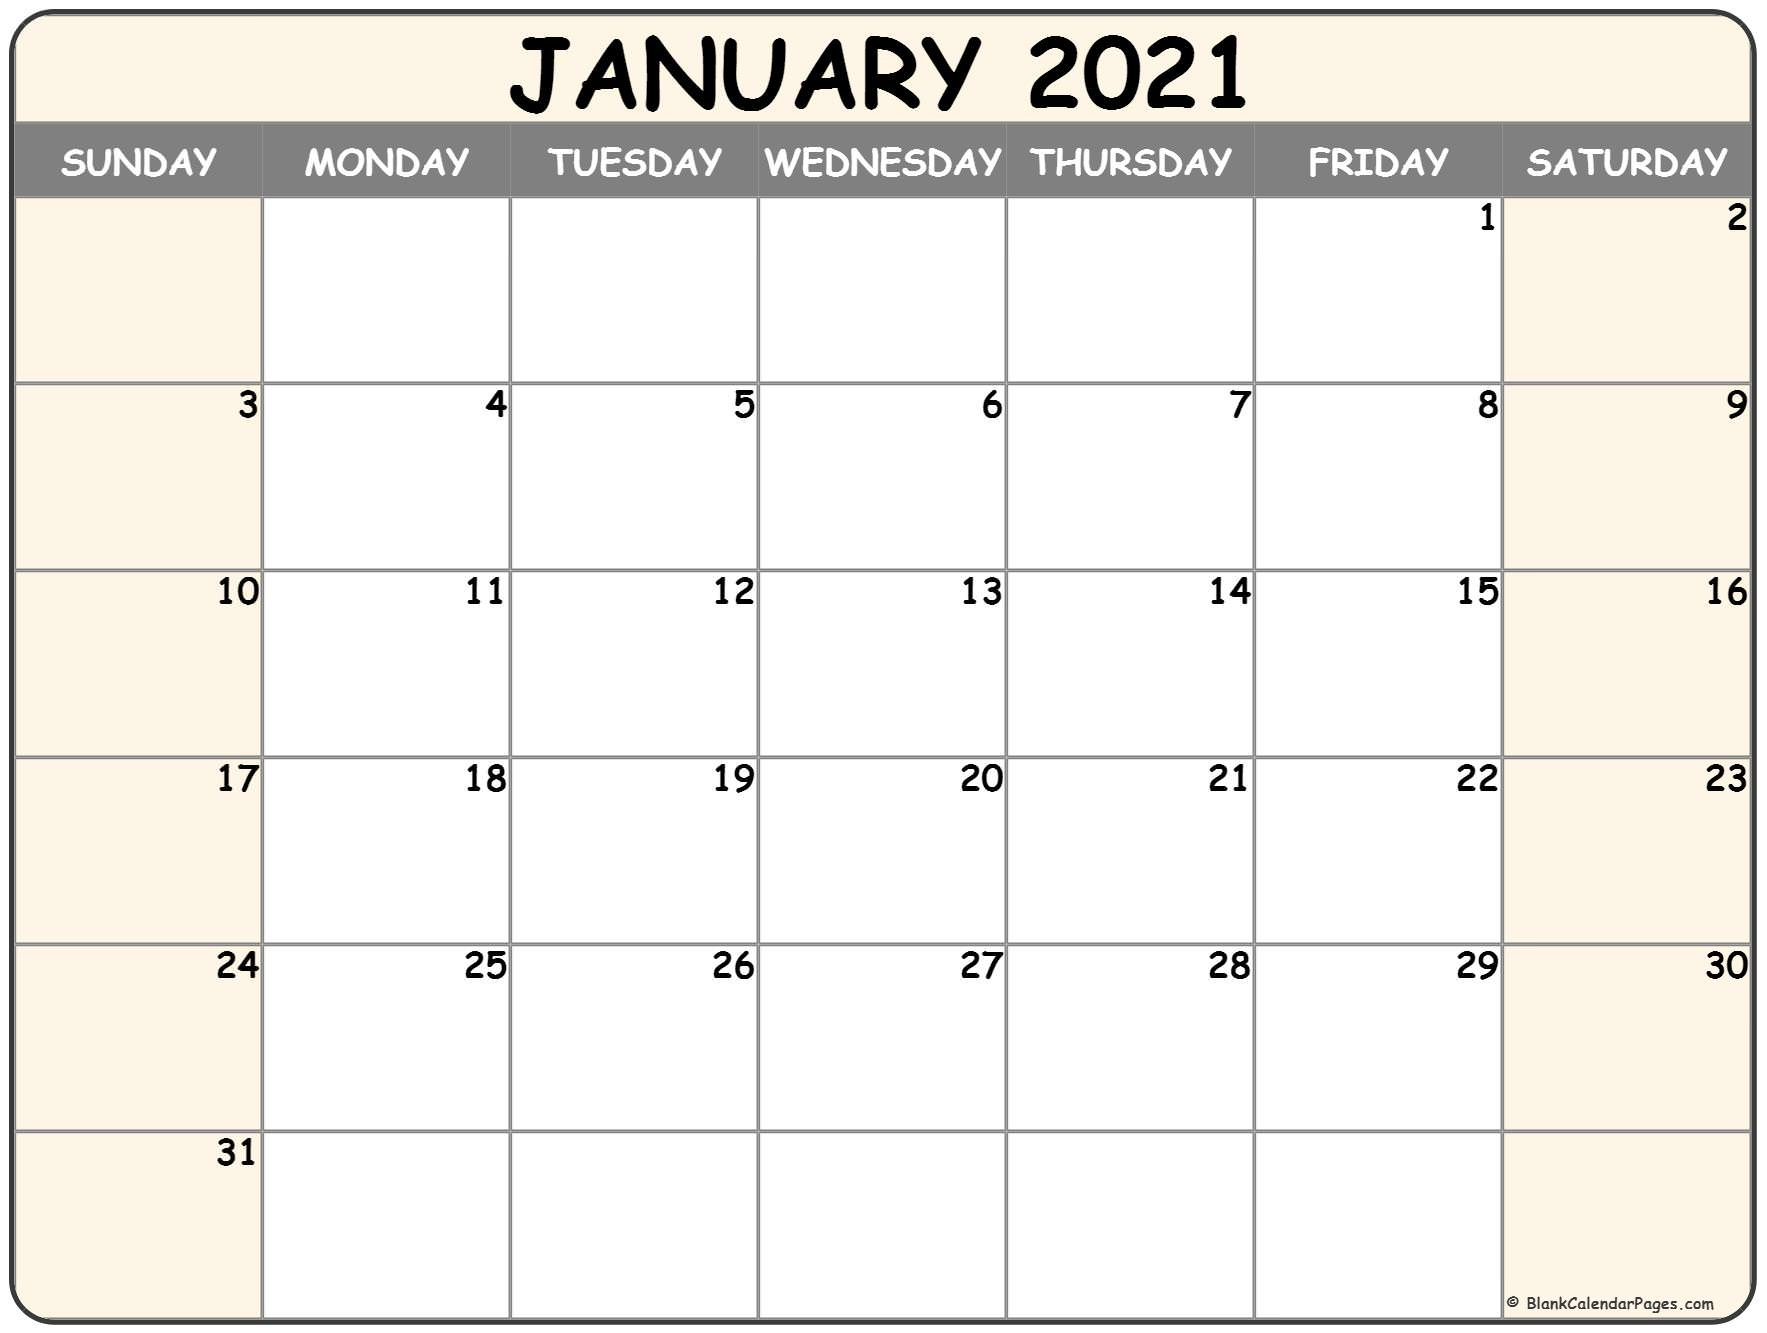 January 2021 Calendar | Free Printable Calendar Templates January To December 2021 Calendar